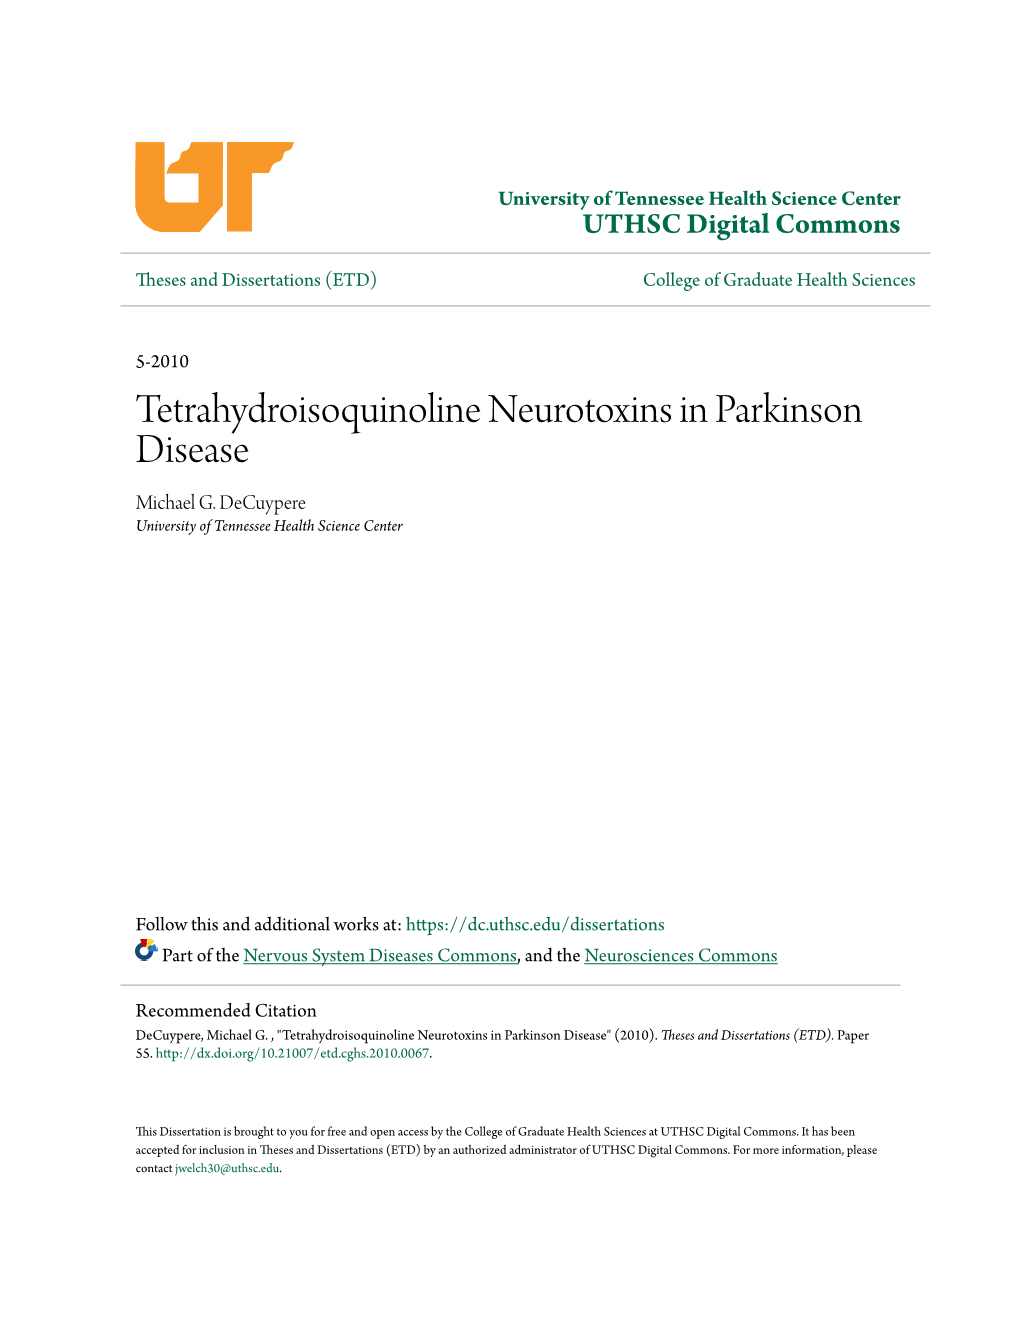 Tetrahydroisoquinoline Neurotoxins in Parkinson Disease Michael G